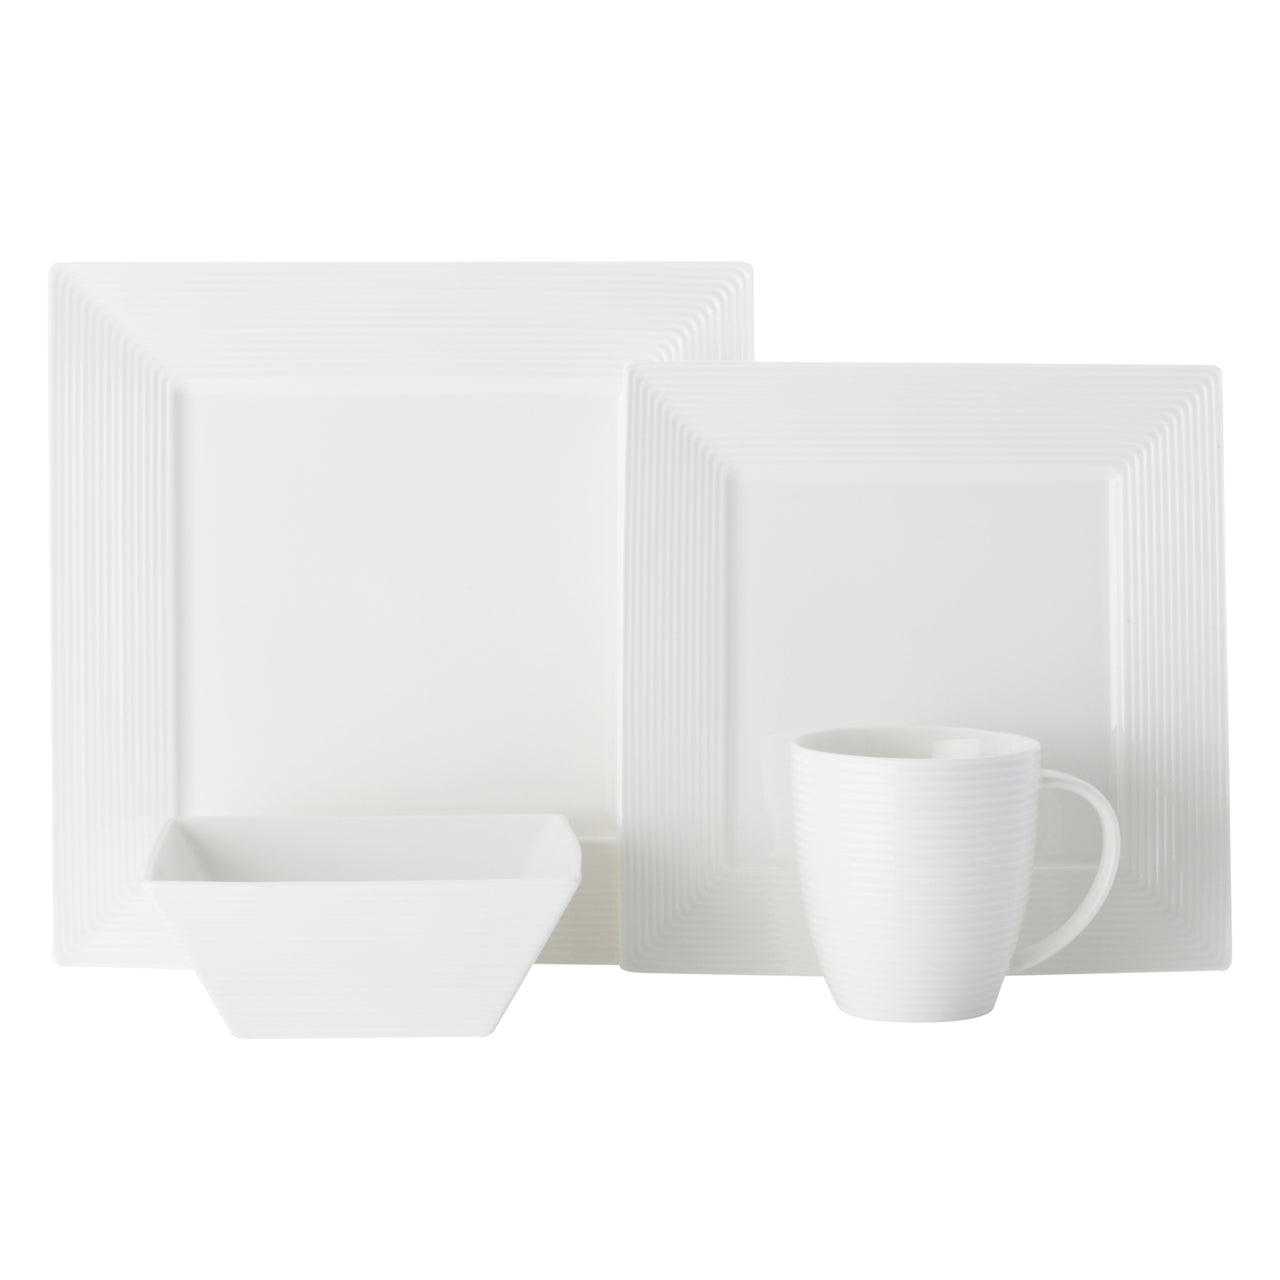 16 Piece Casual White Evolve Square Porcelain Dinner Set